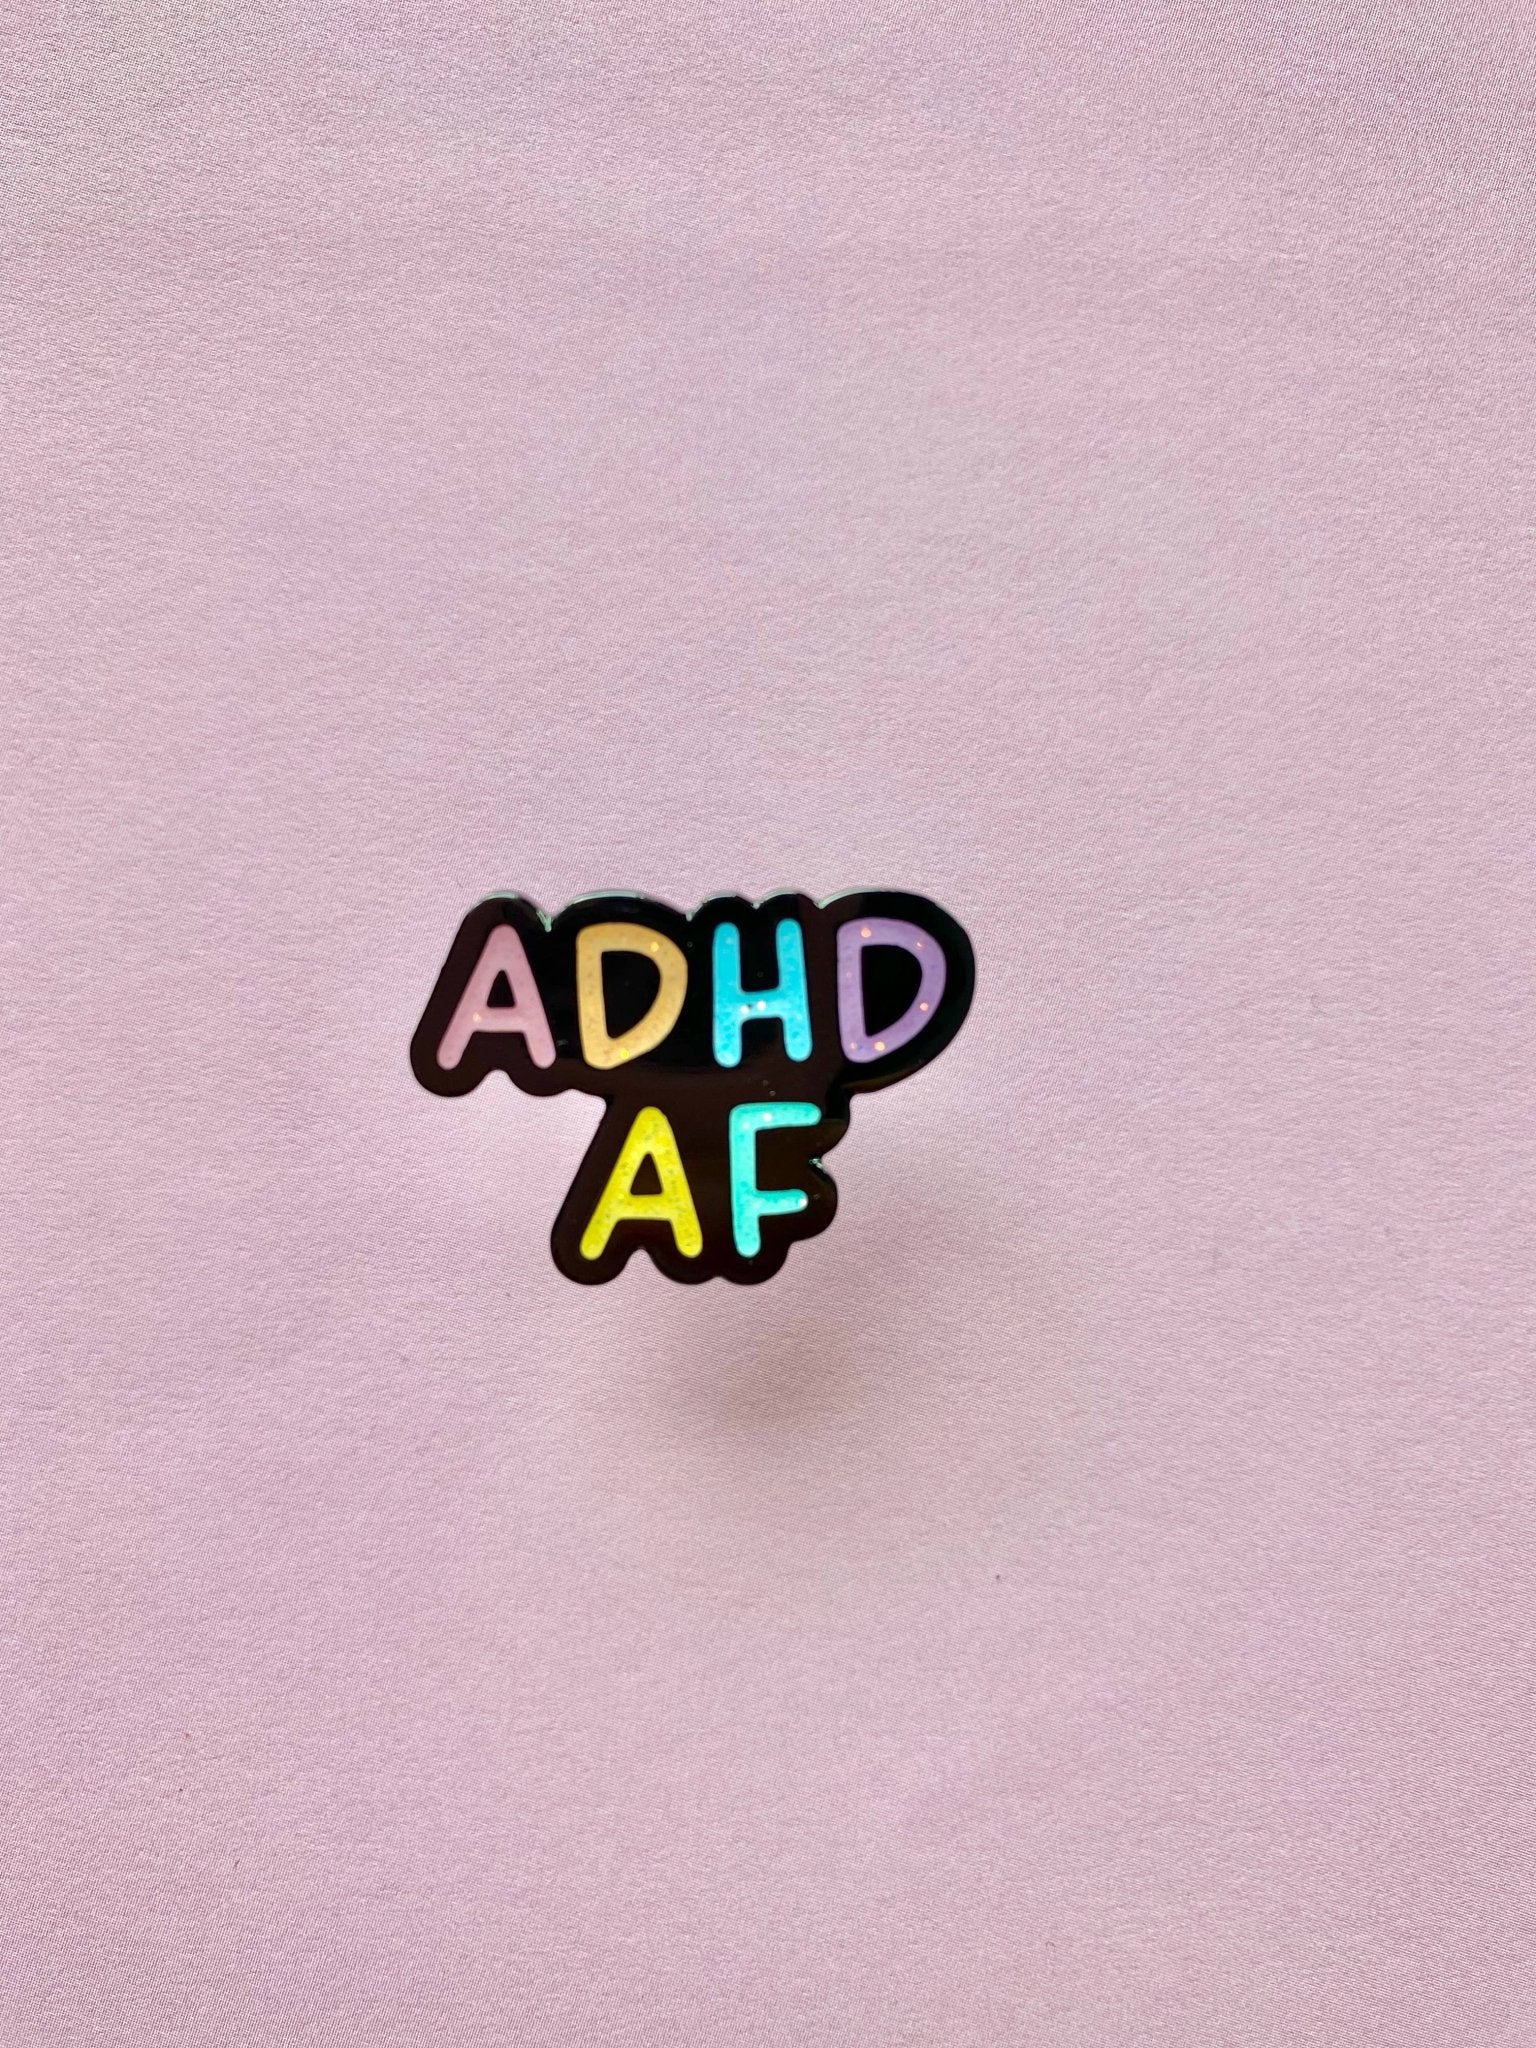 ADHD af mental health neurodivergent enamel pin - Spiral Circle